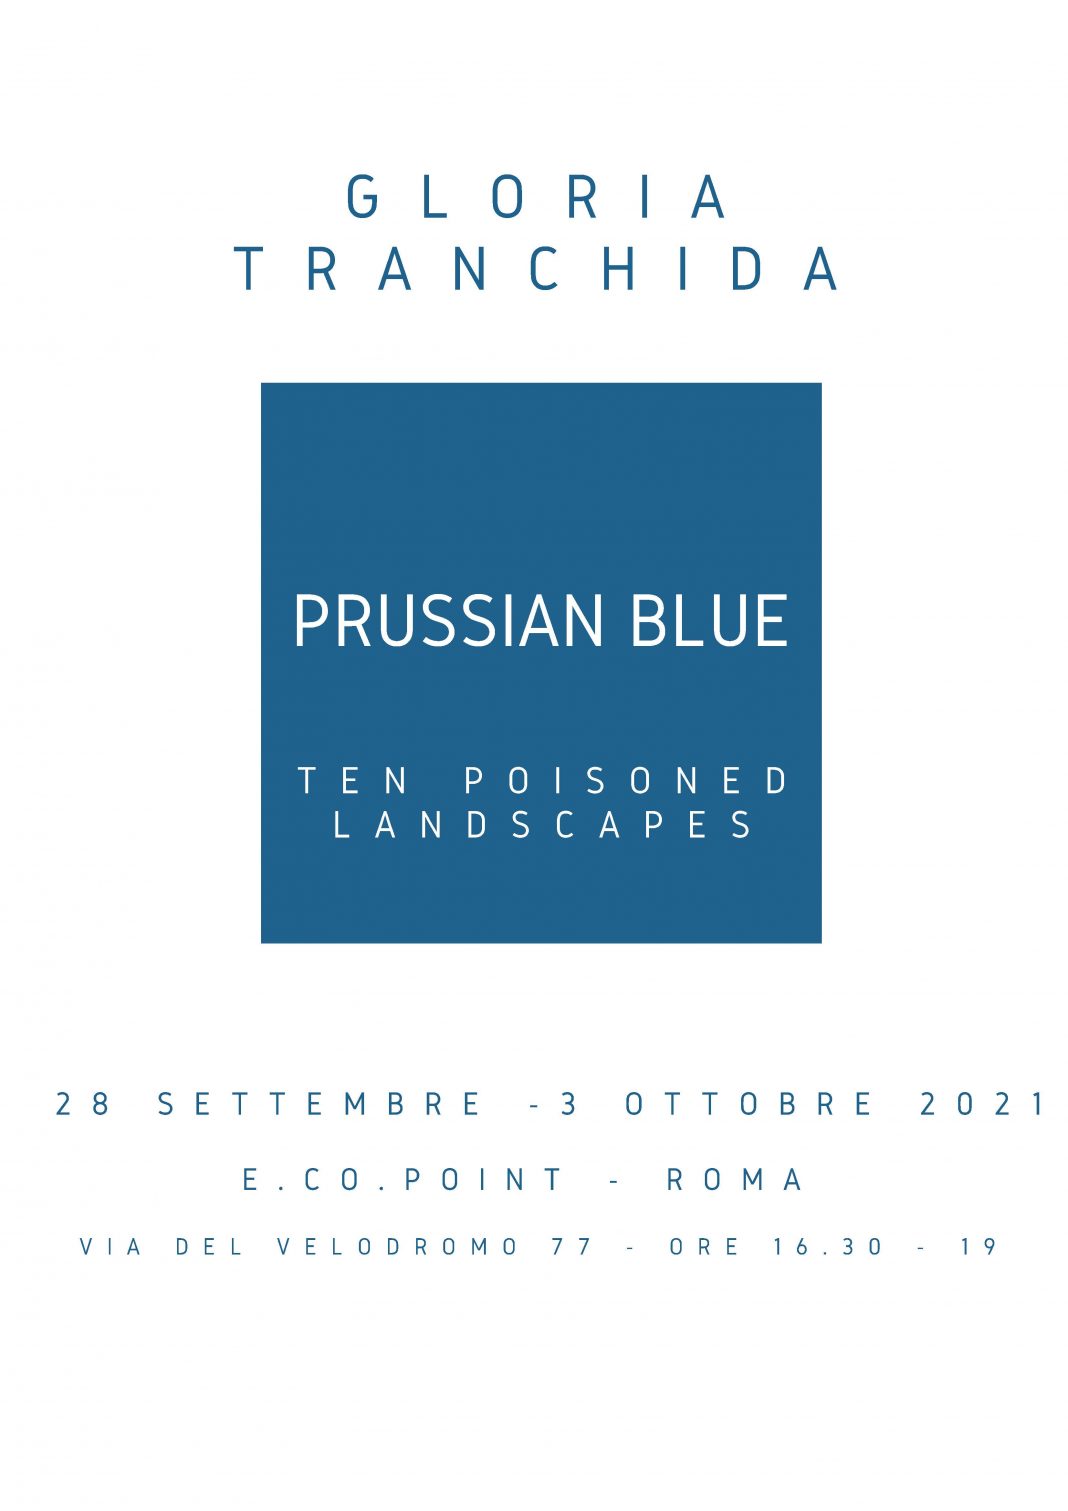 Gloria Tranchida – Prussian Bluehttps://www.exibart.com/repository/media/2021/10/LOCANDINA-PRUSSIAN-BLUE-1068x1511.jpg